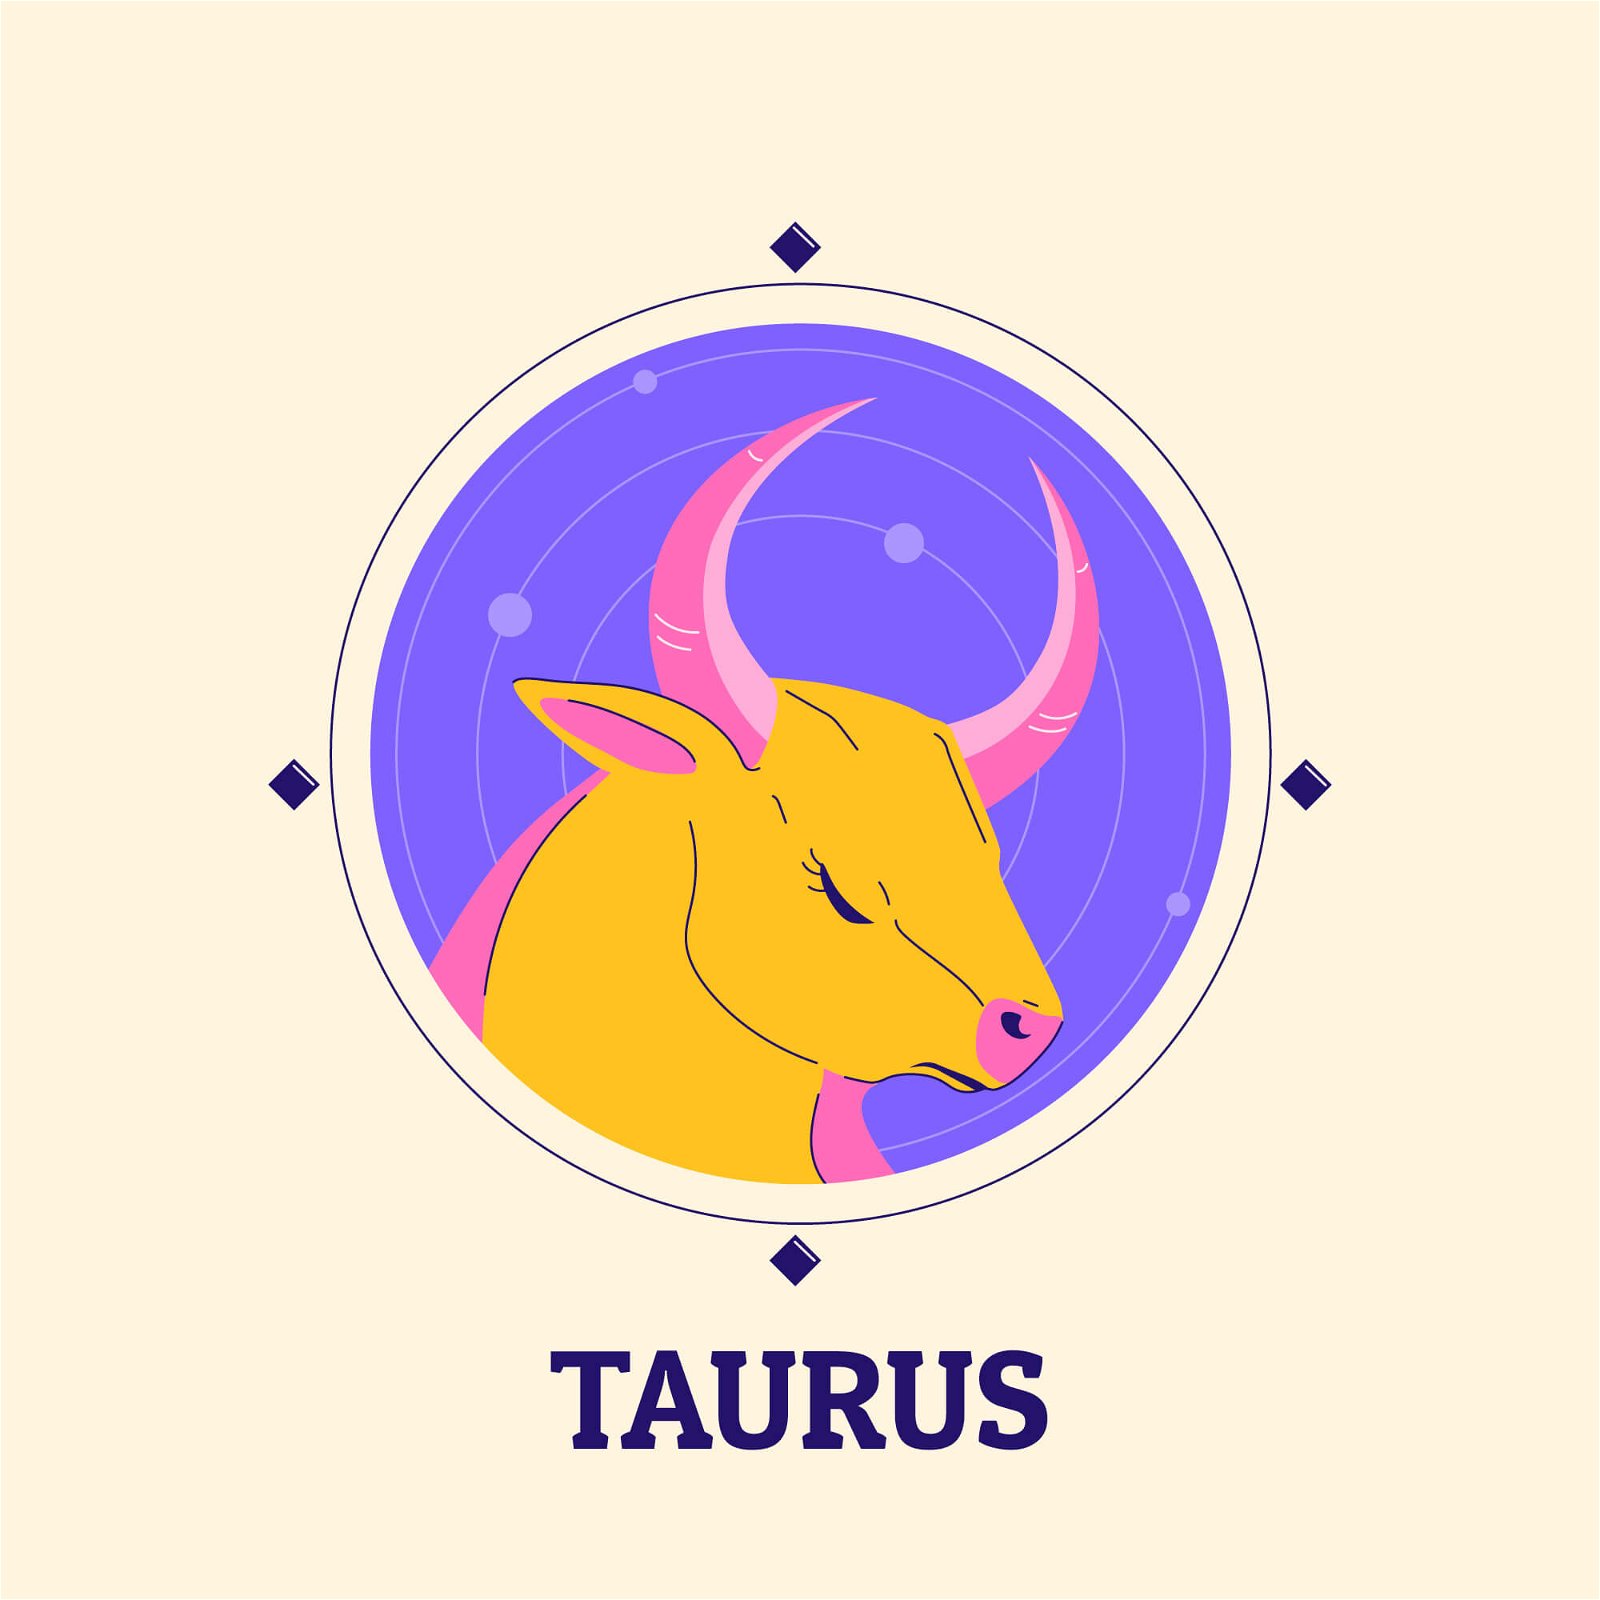 taurus image